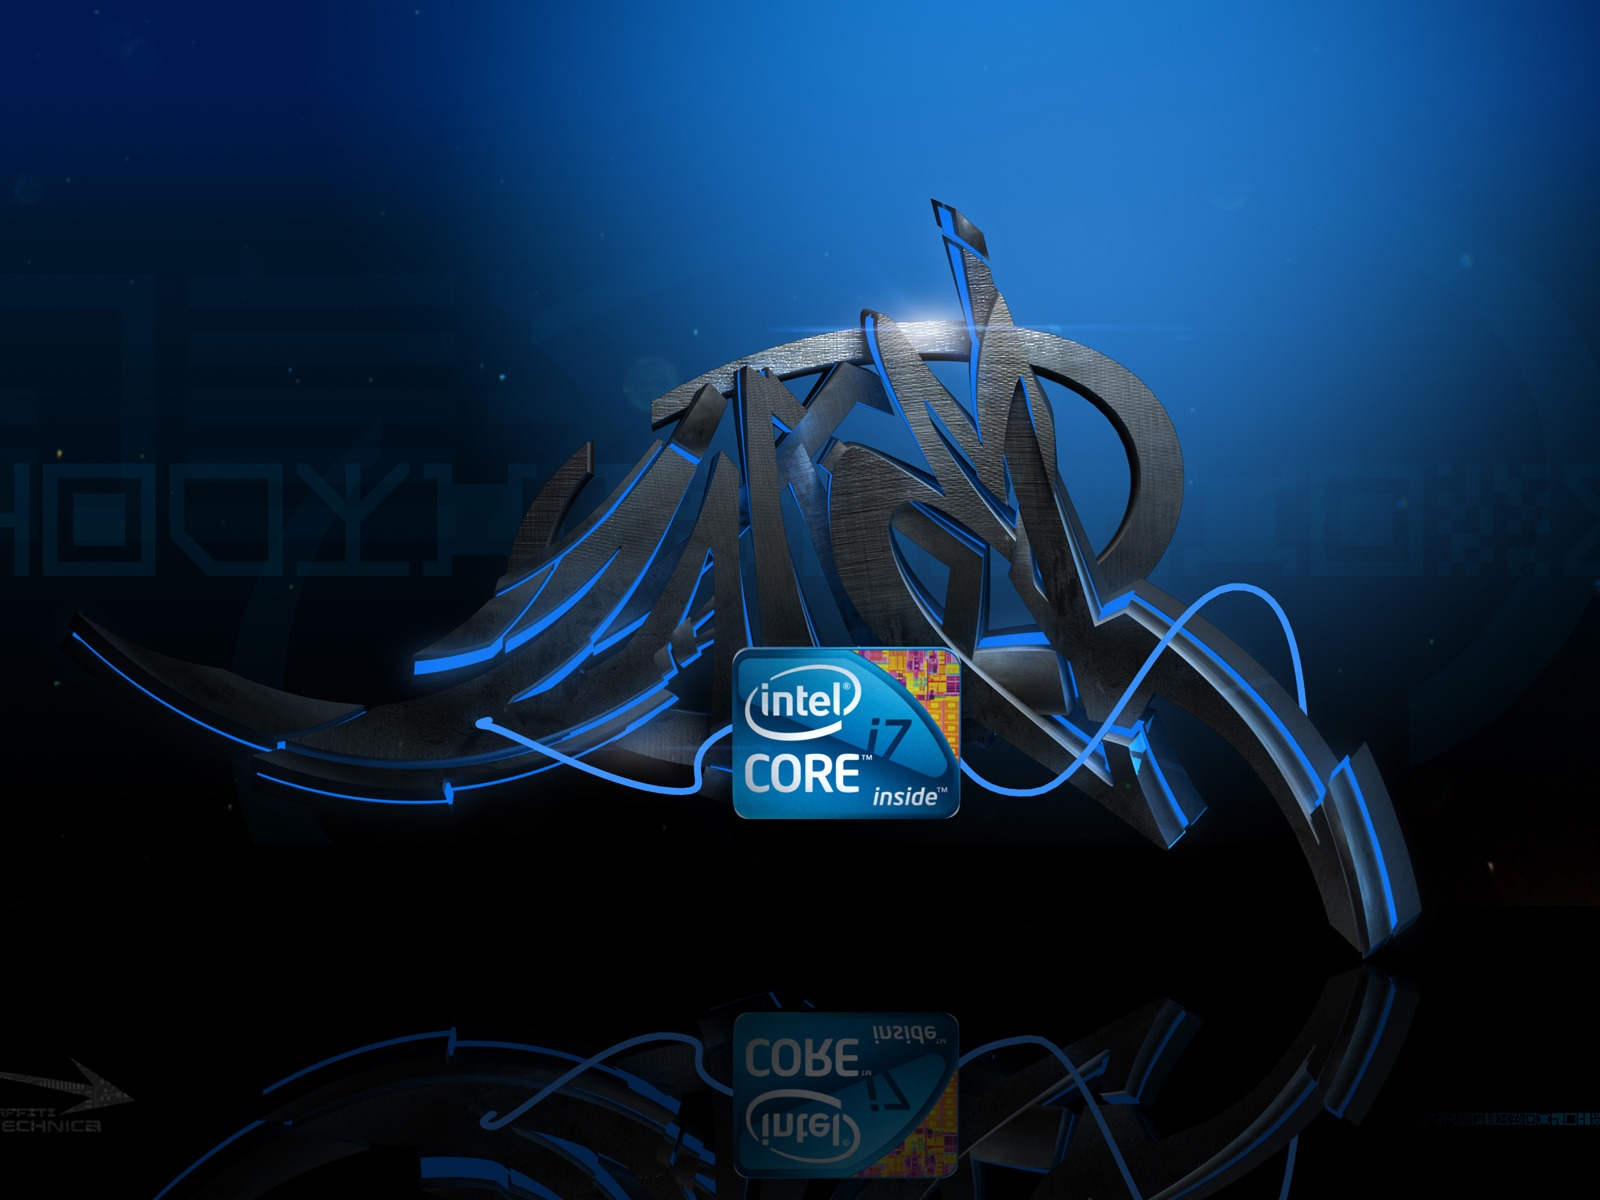 Intel i7 Graffiti for 1600 x 1200 resolution